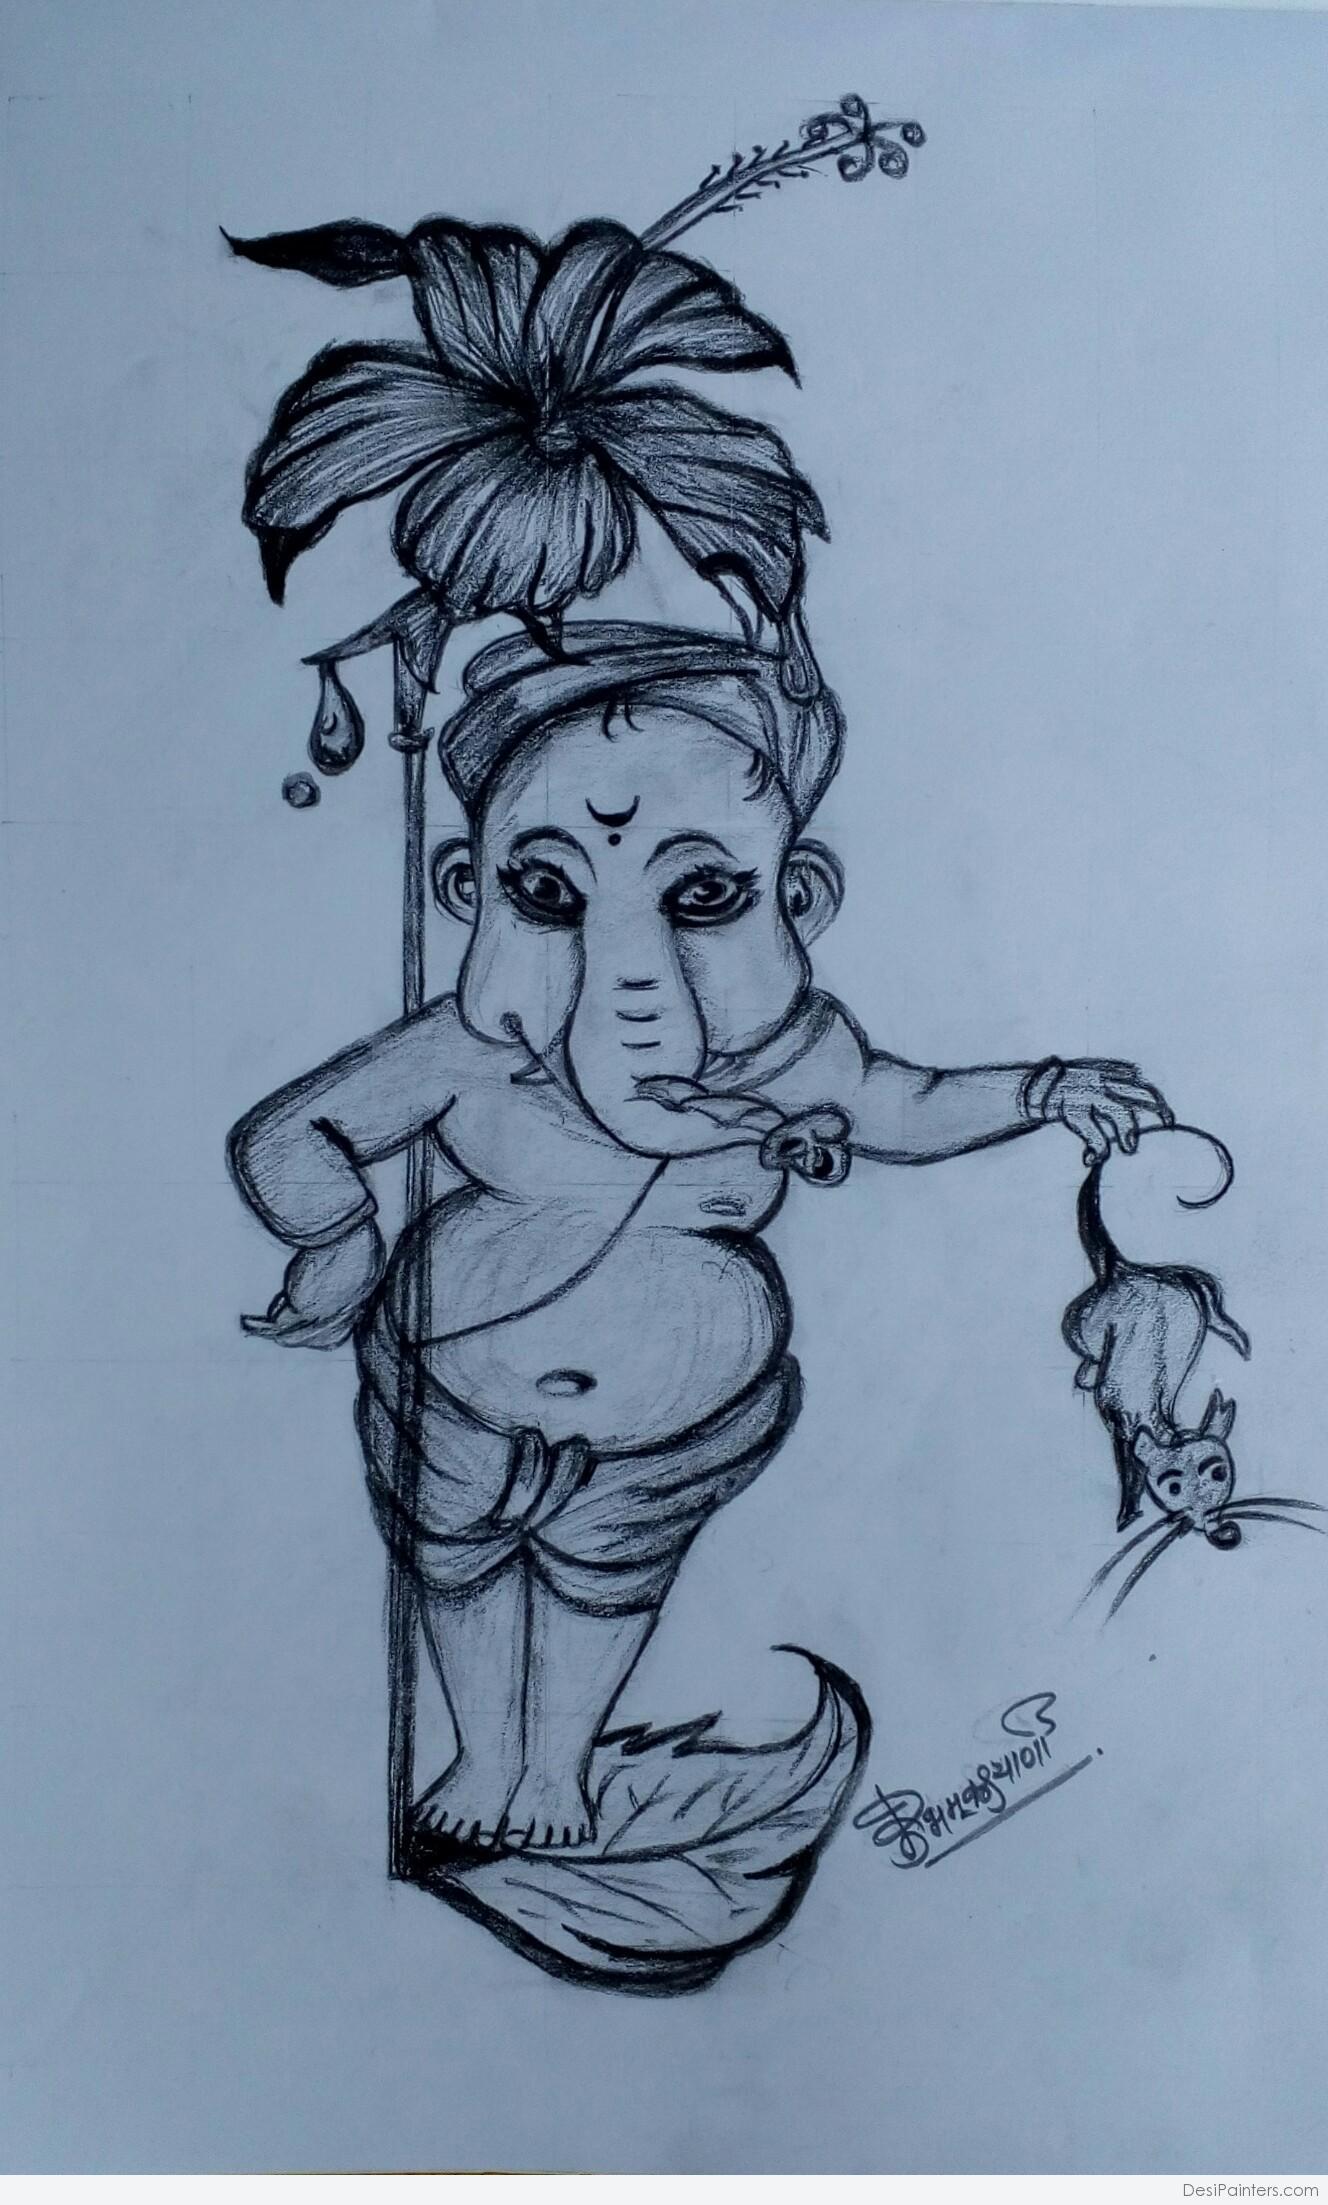 Great Pencil Sketch Of Ganpati Bappa | DesiPainters.com-saigonsouth.com.vn